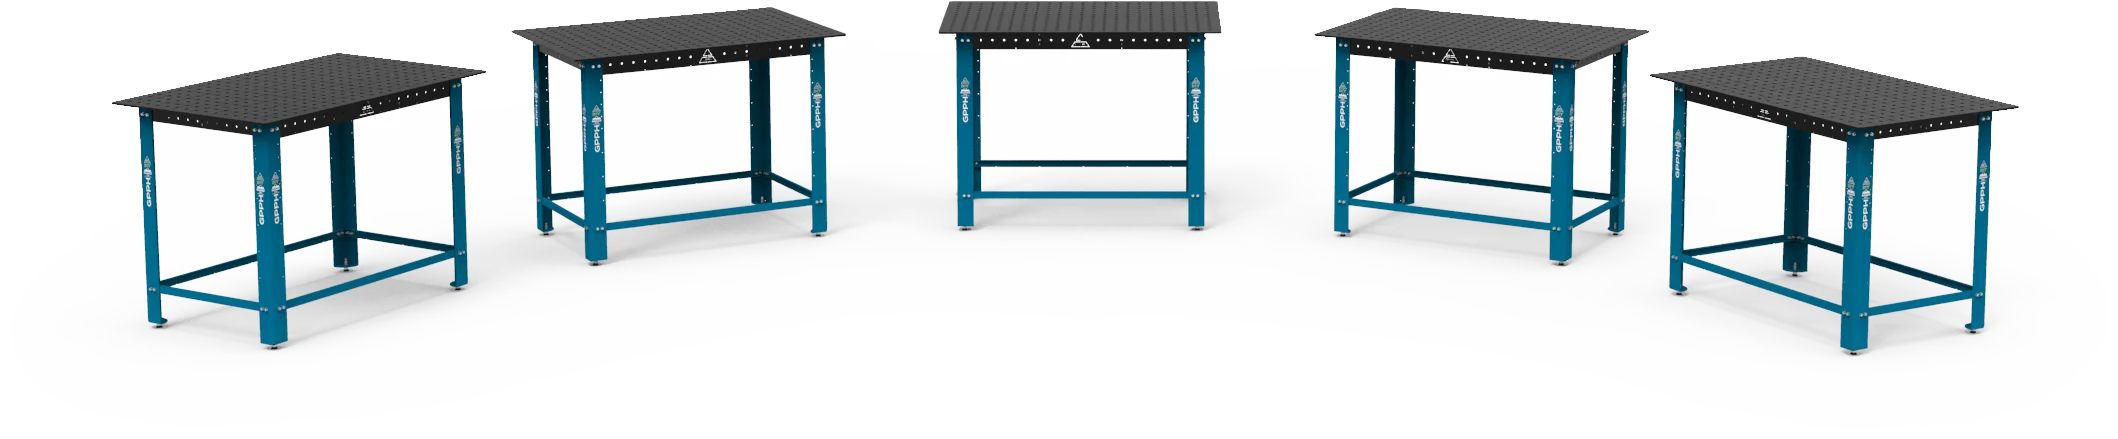 Carrello porta attrezzi GPPH 1000x800x1130mm per accessori tavoli